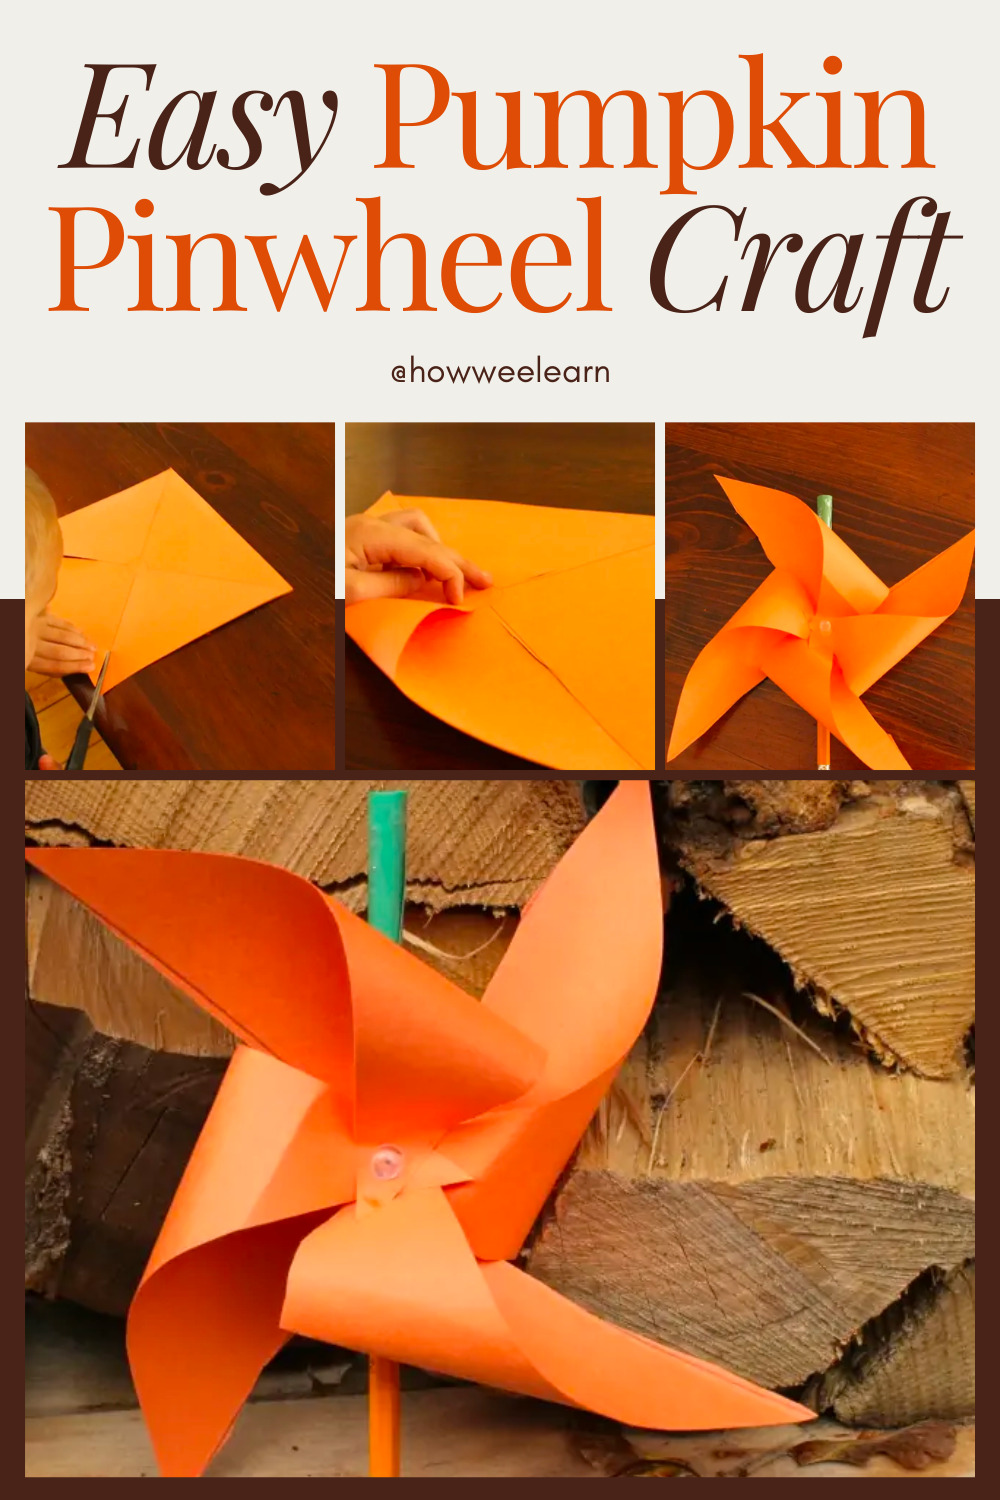 Easy Pumpkin Pinwheel Craft: These pumpkin pinwheels are great Halloween crafts!